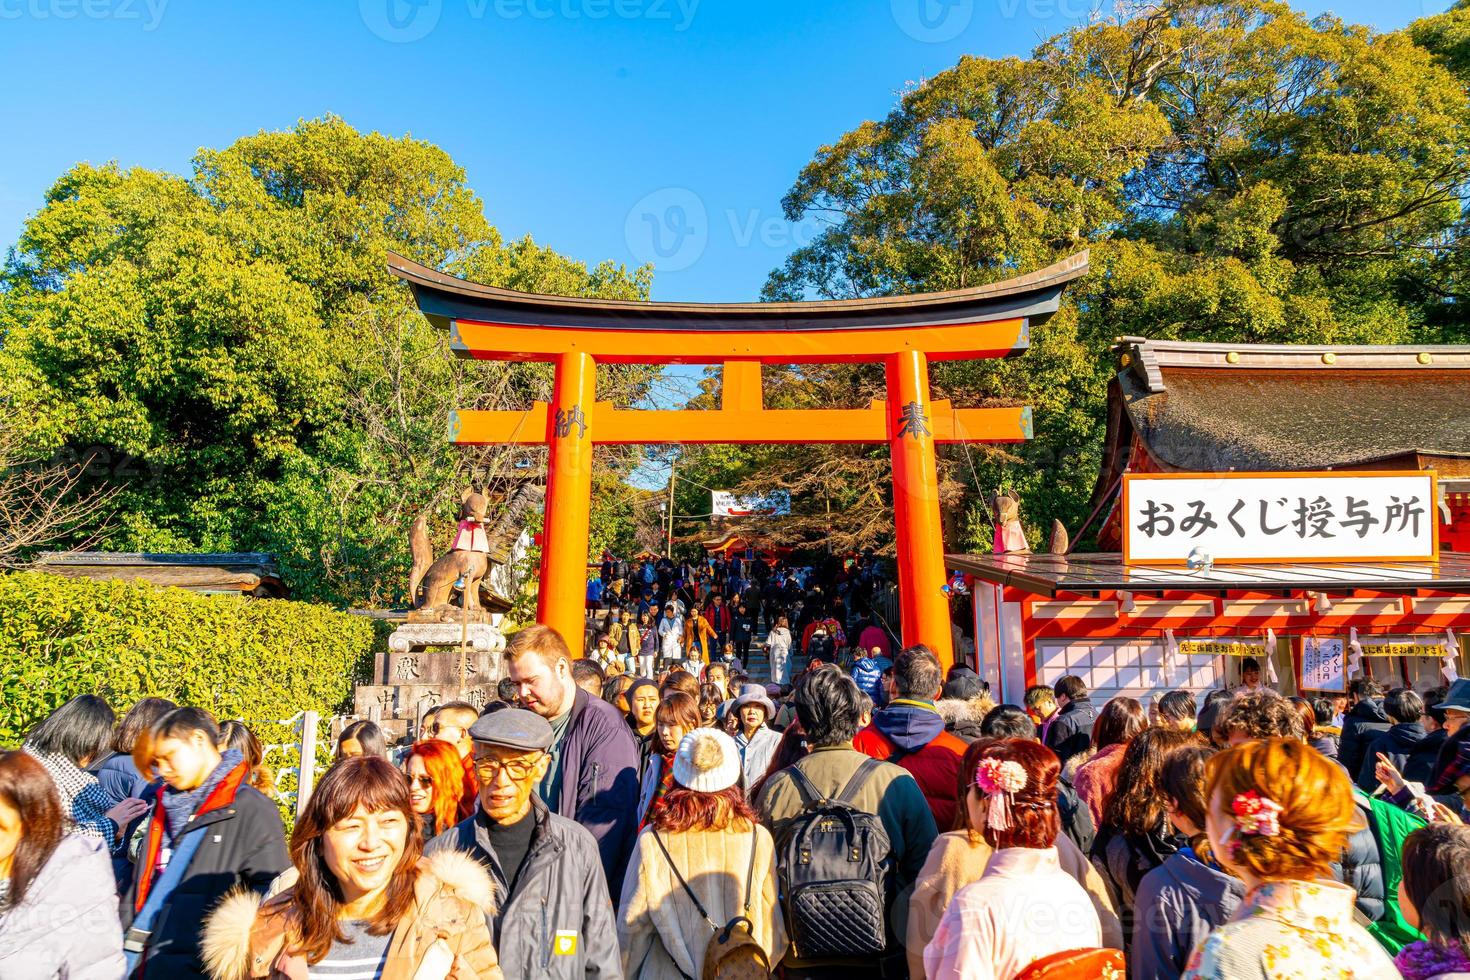 kyoto, japan - 11 jan 2020 - rode torii-poorten bij fushimi inari taisha met toeristen en japanse studenten. fushimi inari is het belangrijkste shinto-heiligdom. foto